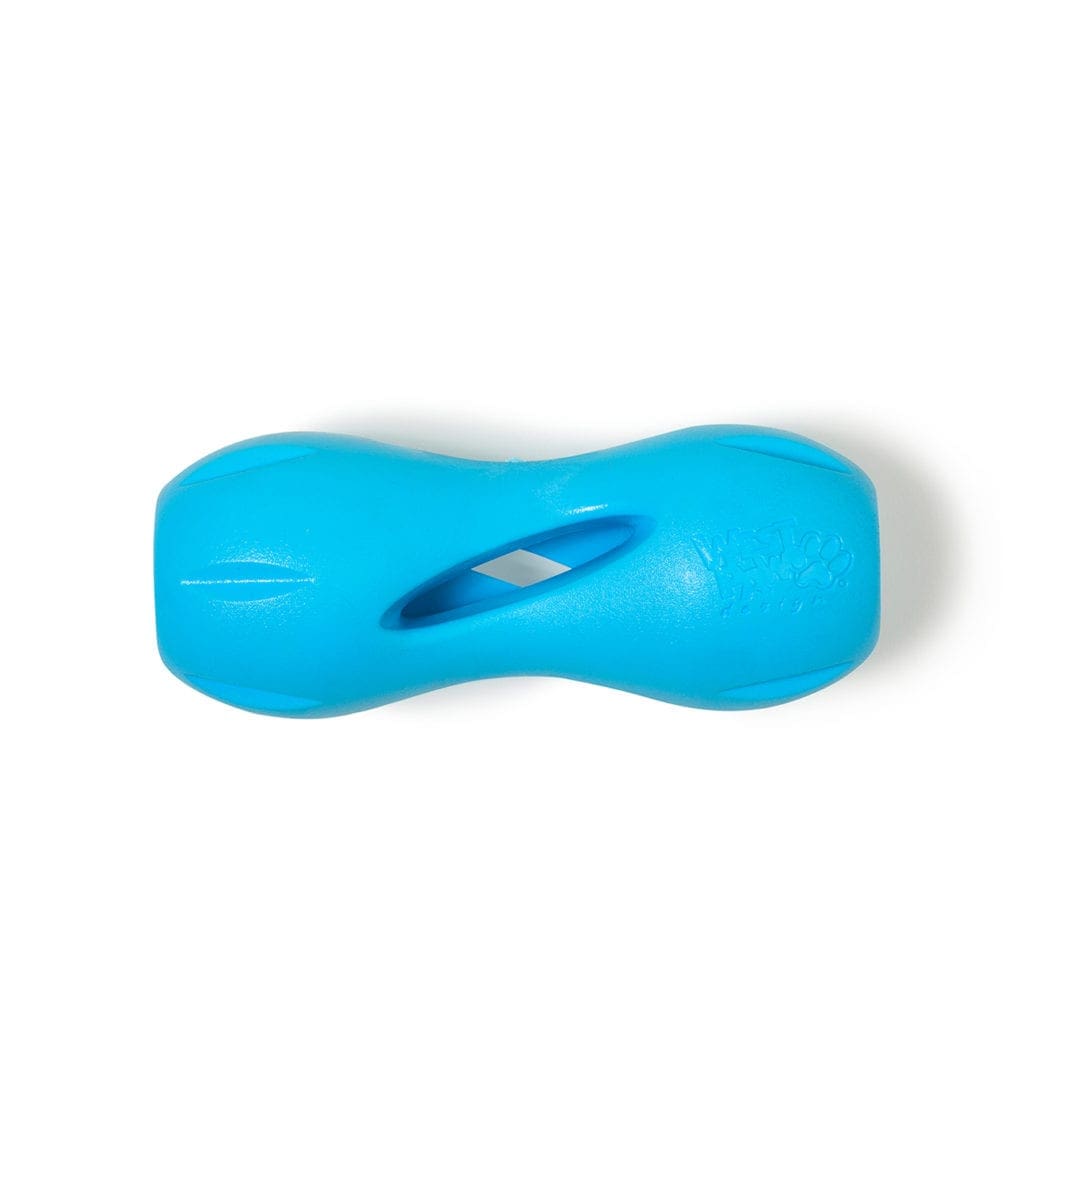 West Paw Dog Toys: Qwizl® Dog Toy (Aqua Blue, Large) with Zogoflex